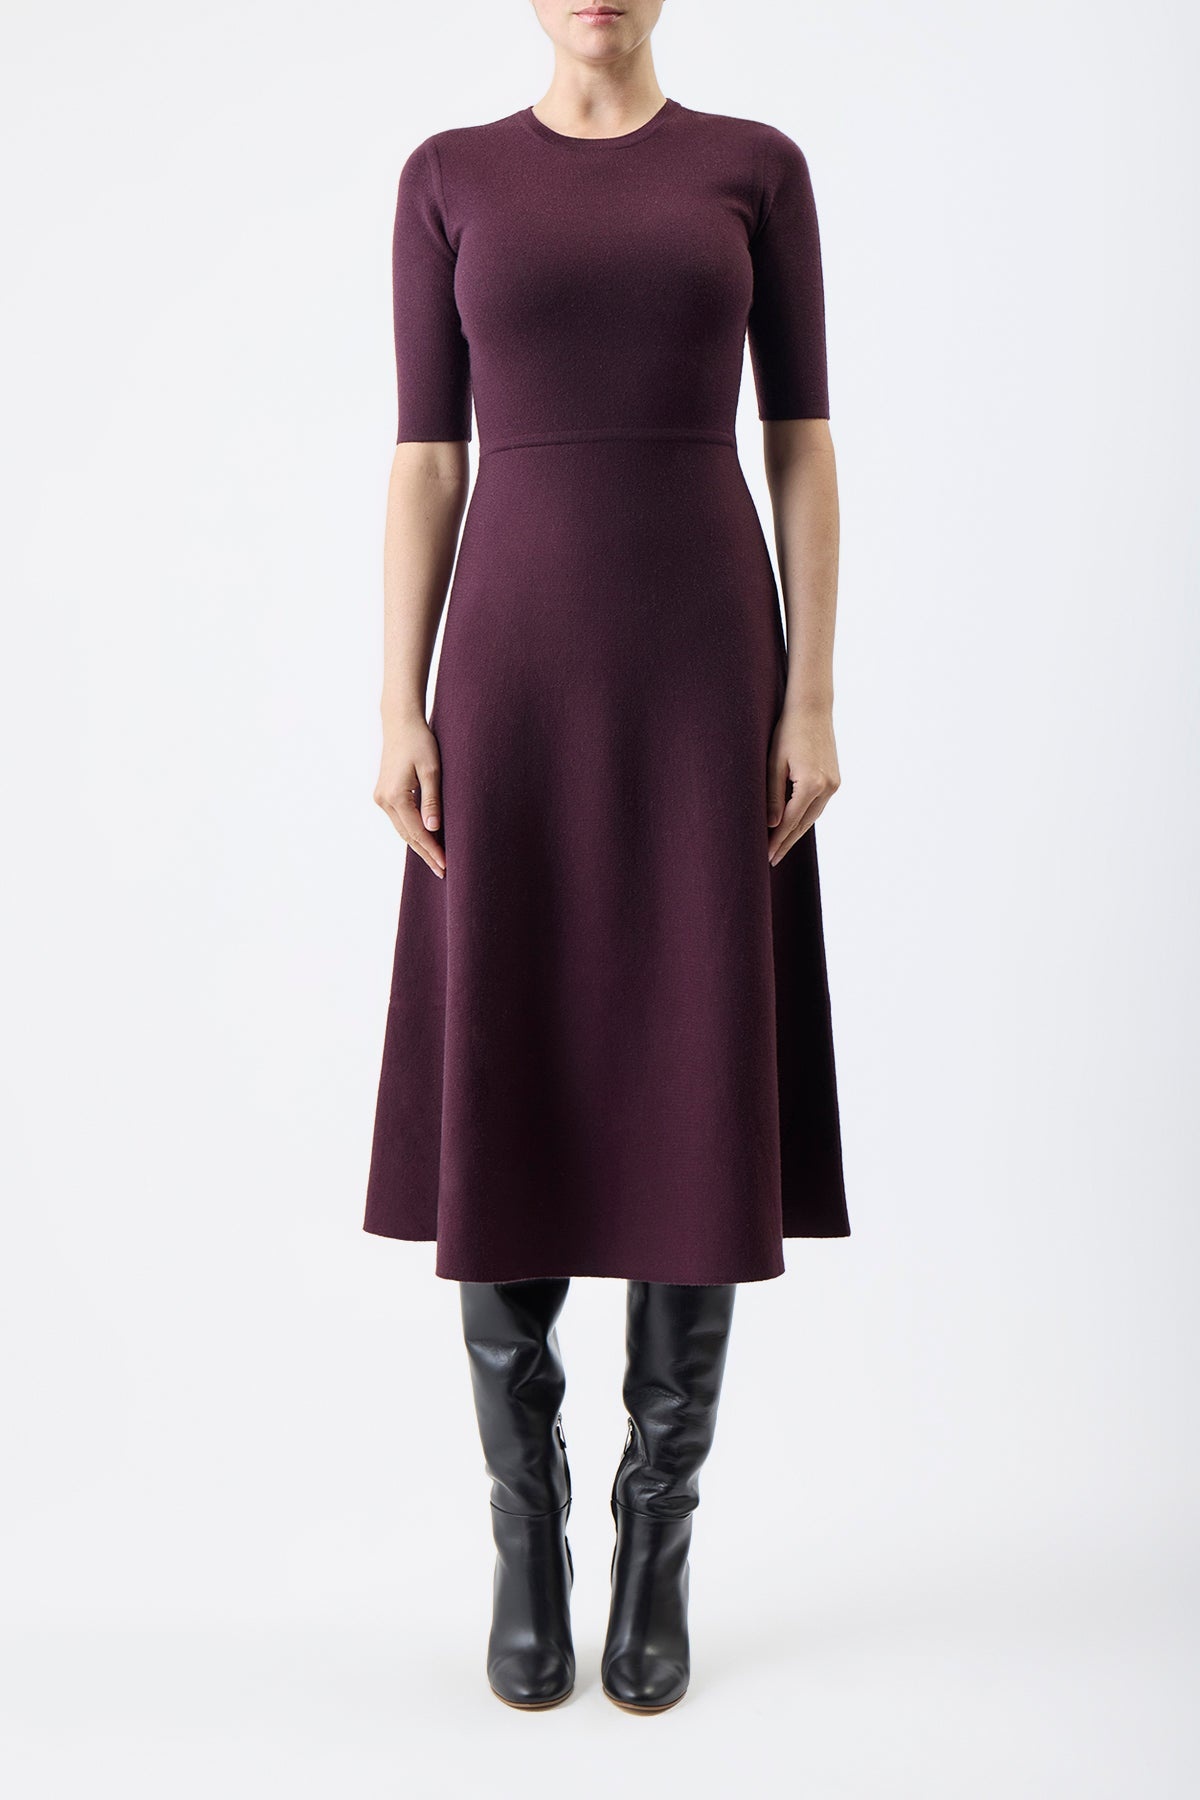 Seymore Knit Dress in Deep Bordeaux Cashmere Wool with Silk - 2